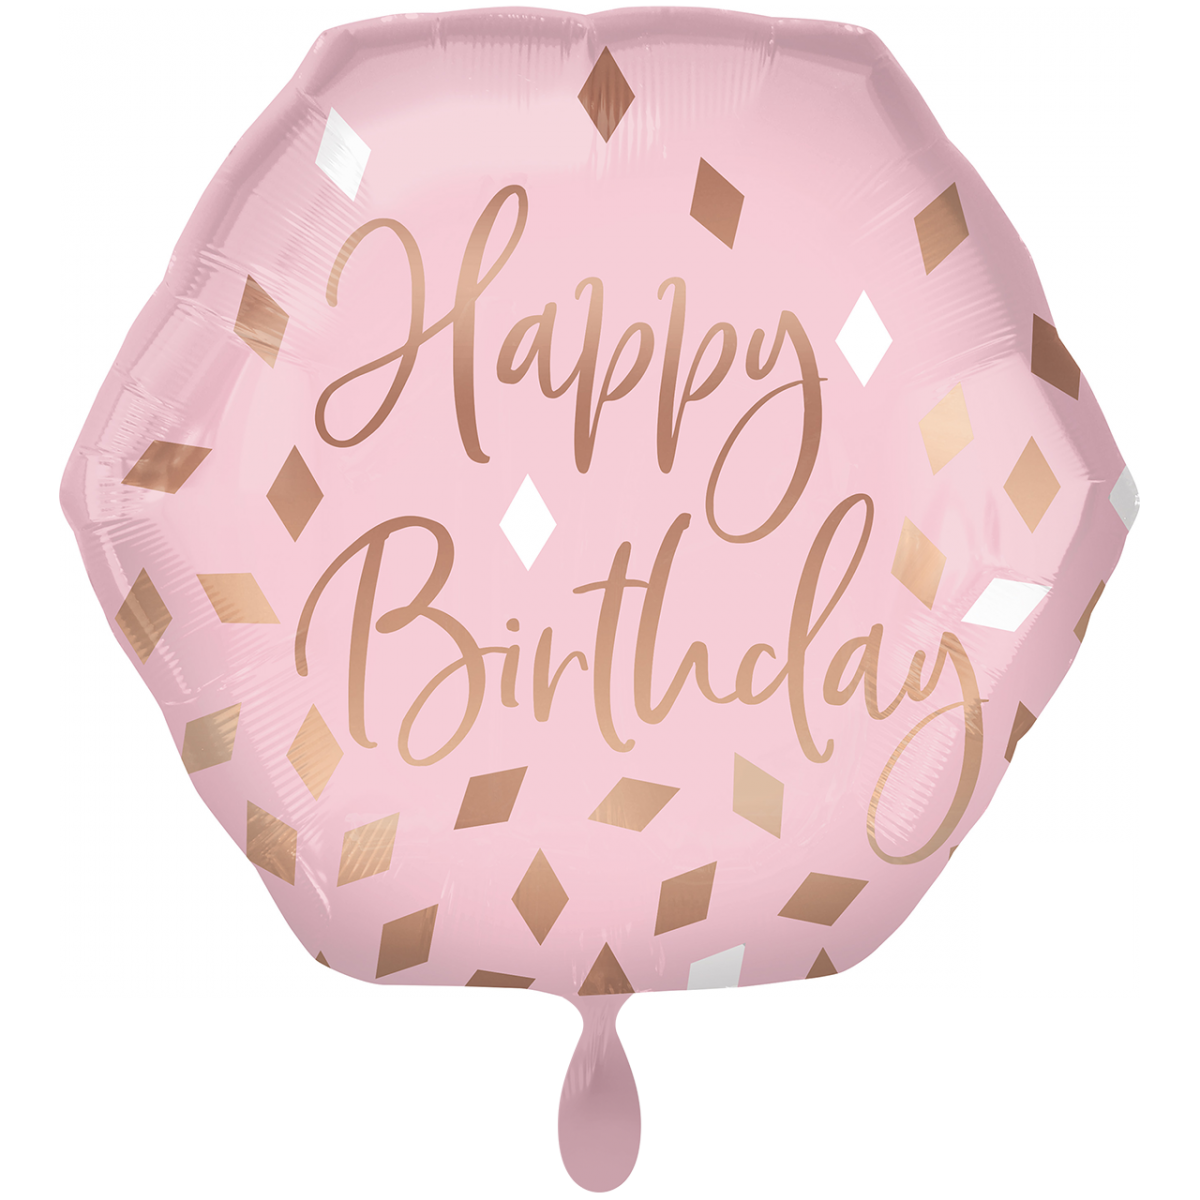 XXL Ballon - Happy Birthday - Rosa, Gold, Blush